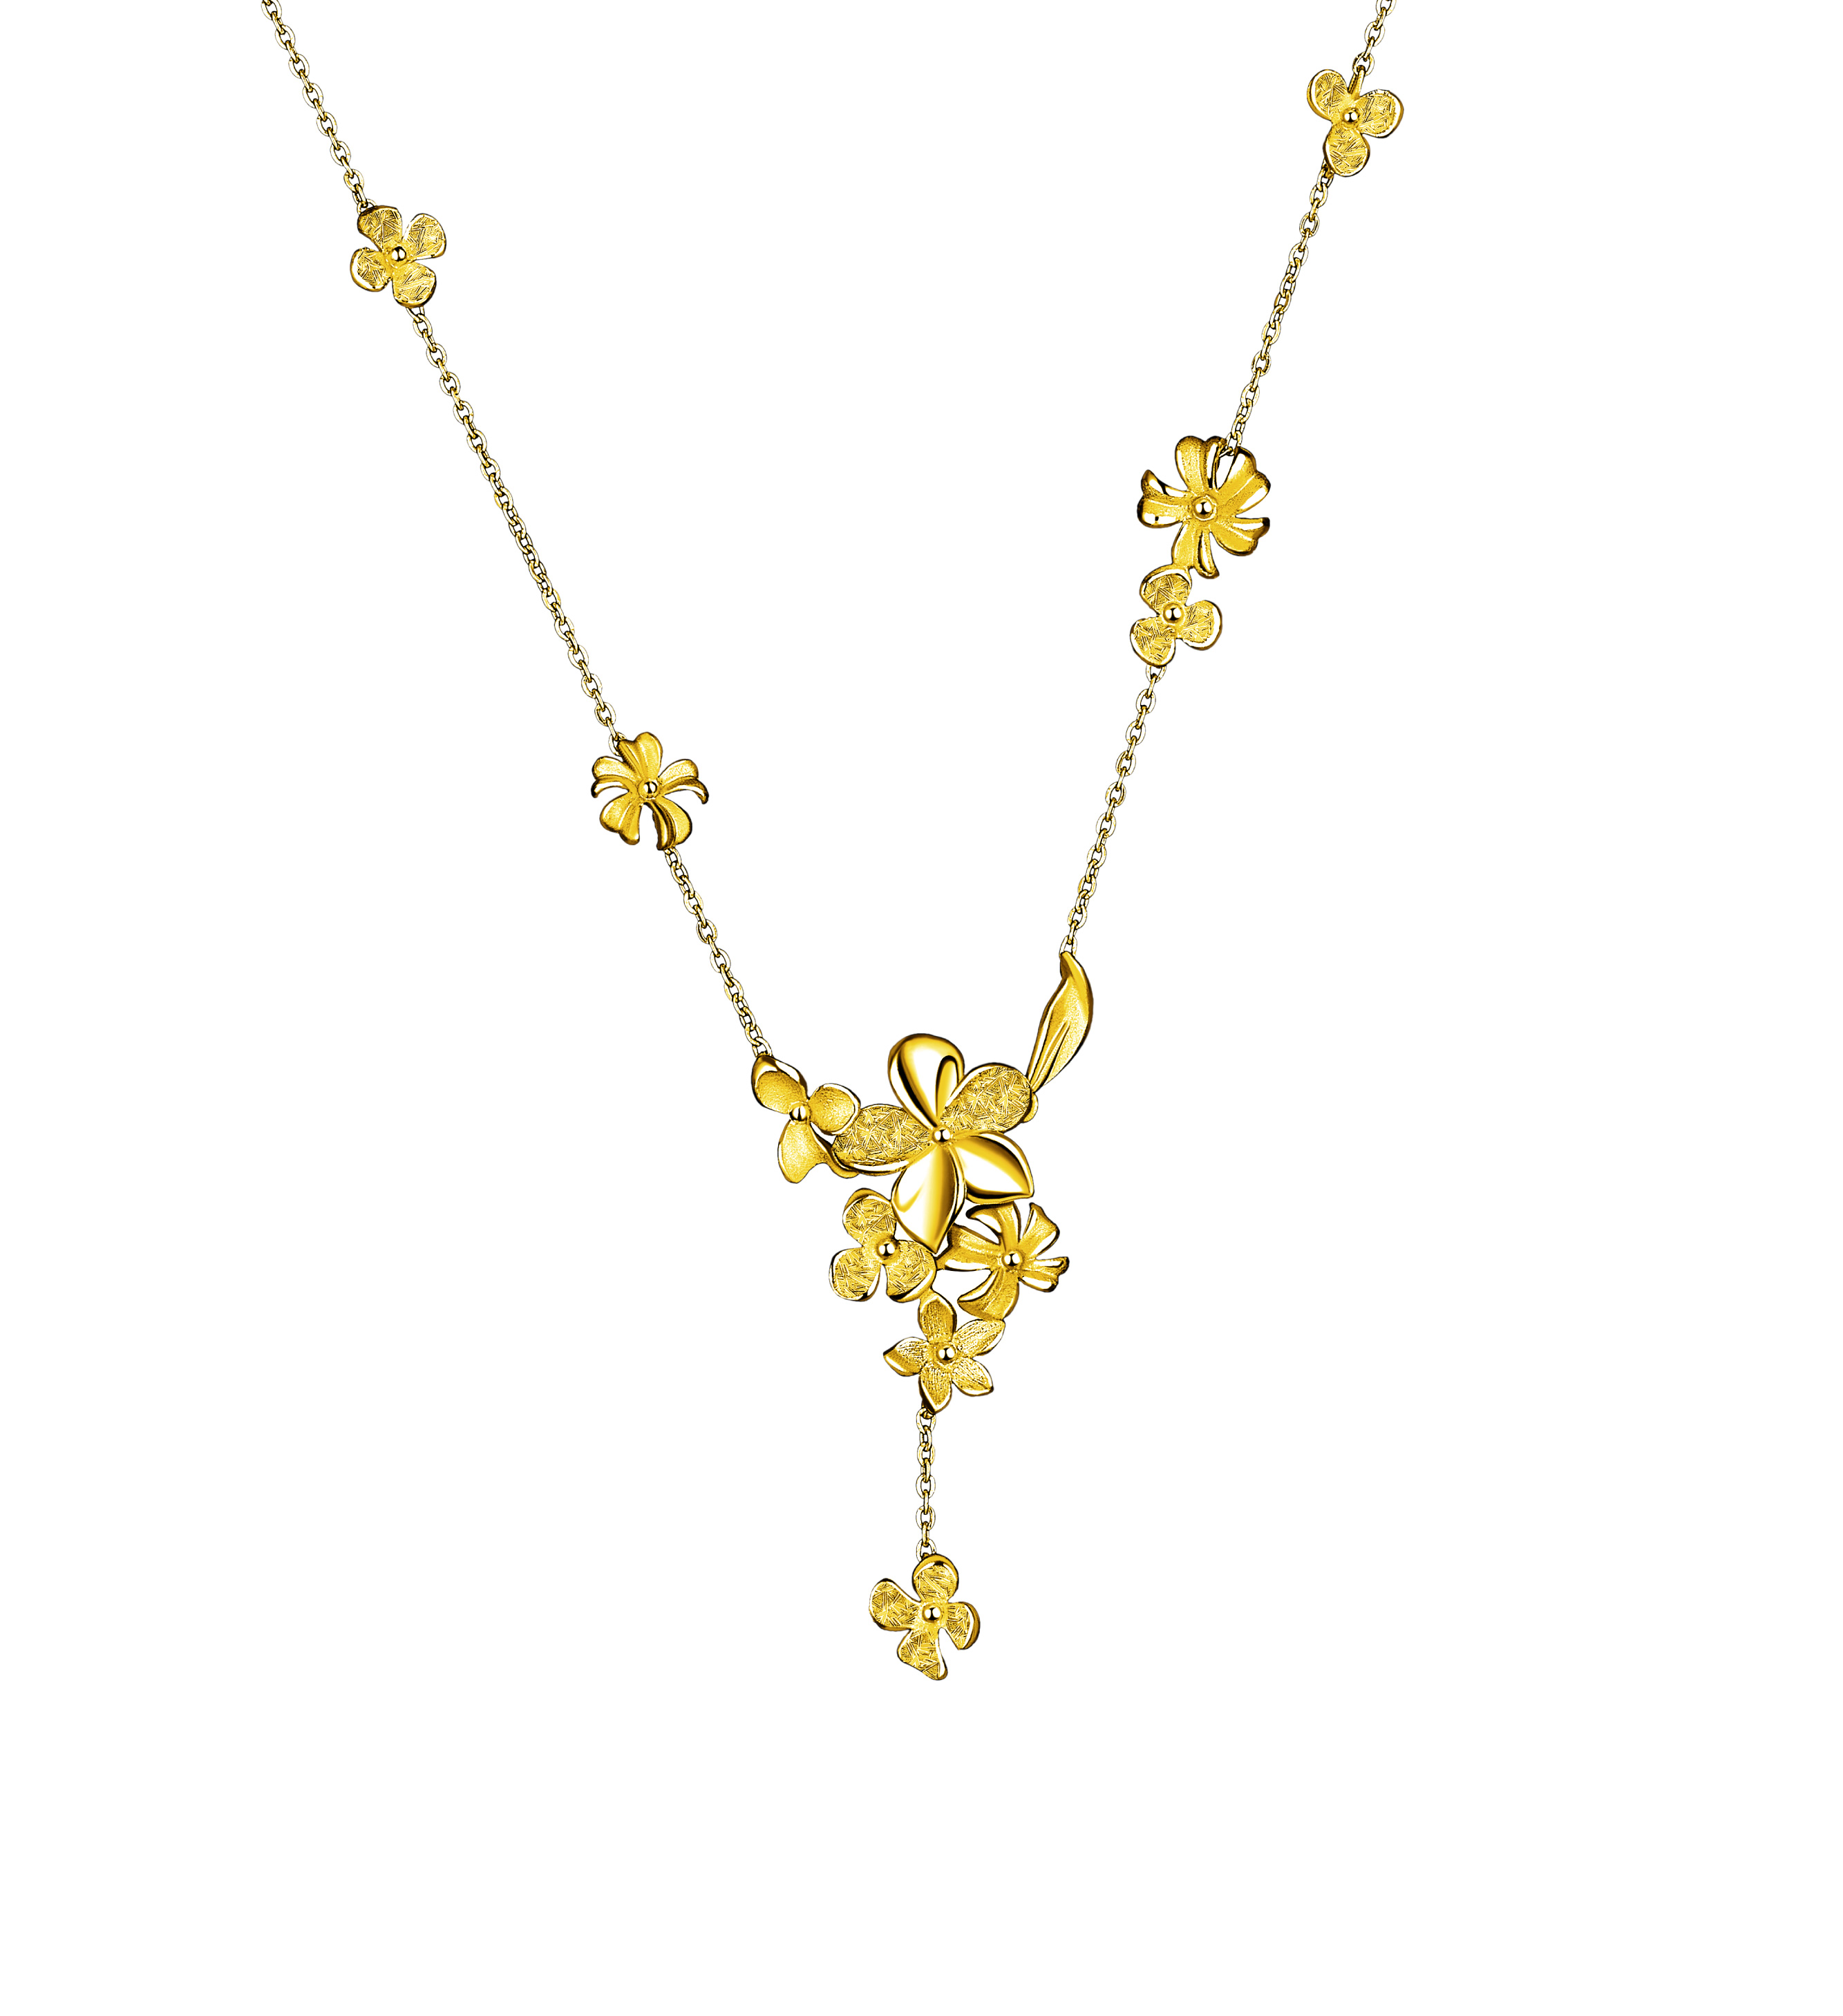 Beloved Collection "Floral Love" Wedding Gold Necklace